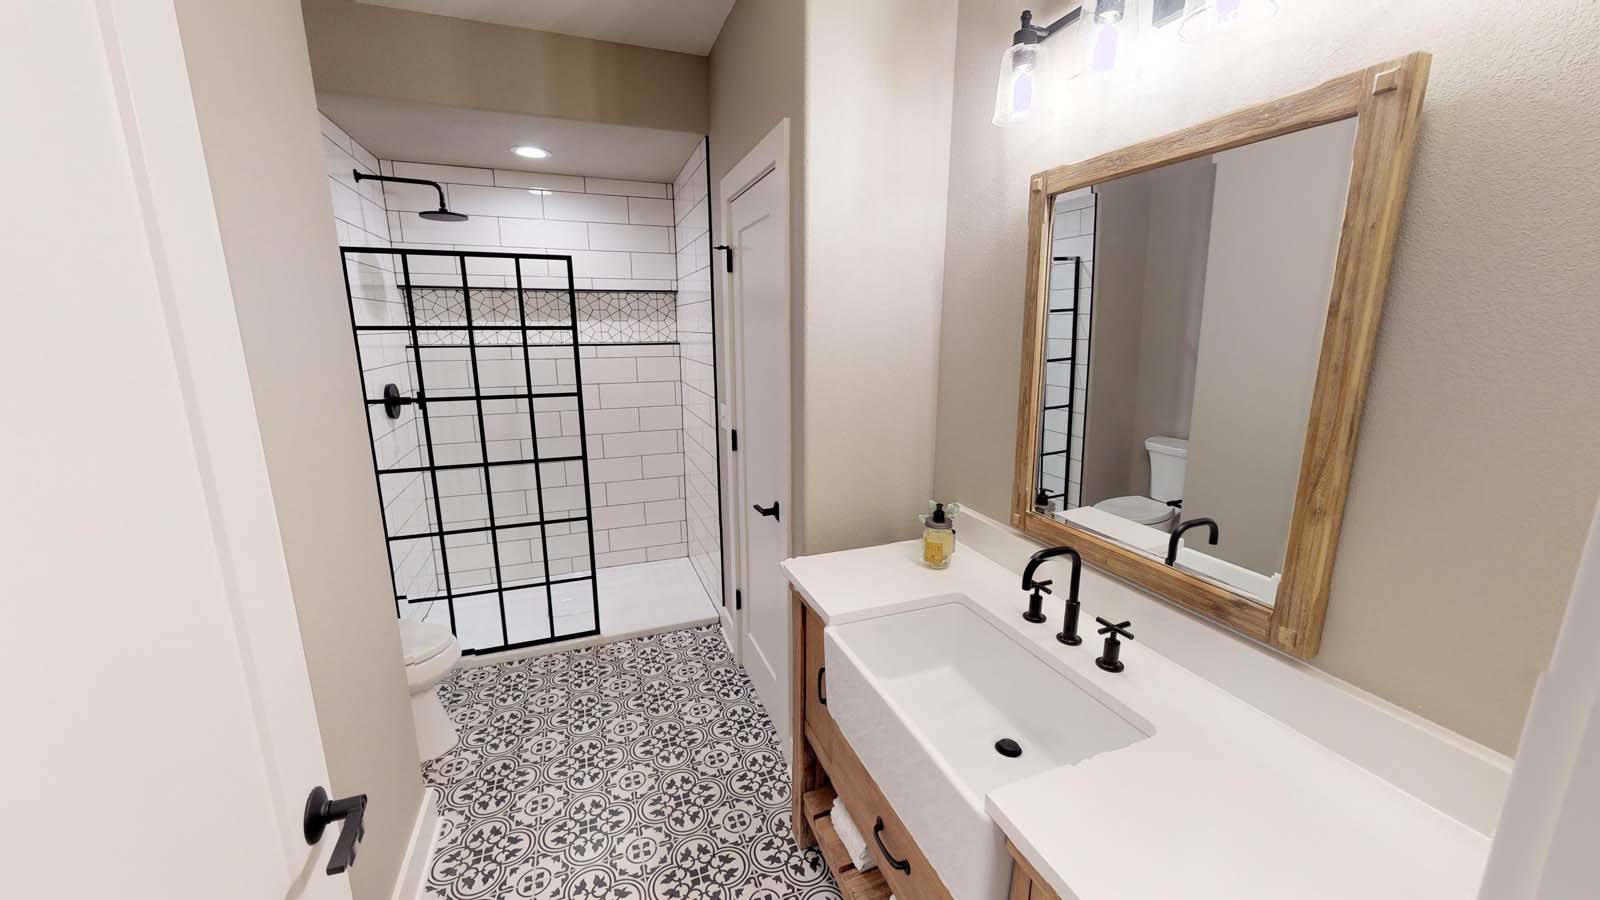 Demlang Builders - The Harper model home lower level bathroom